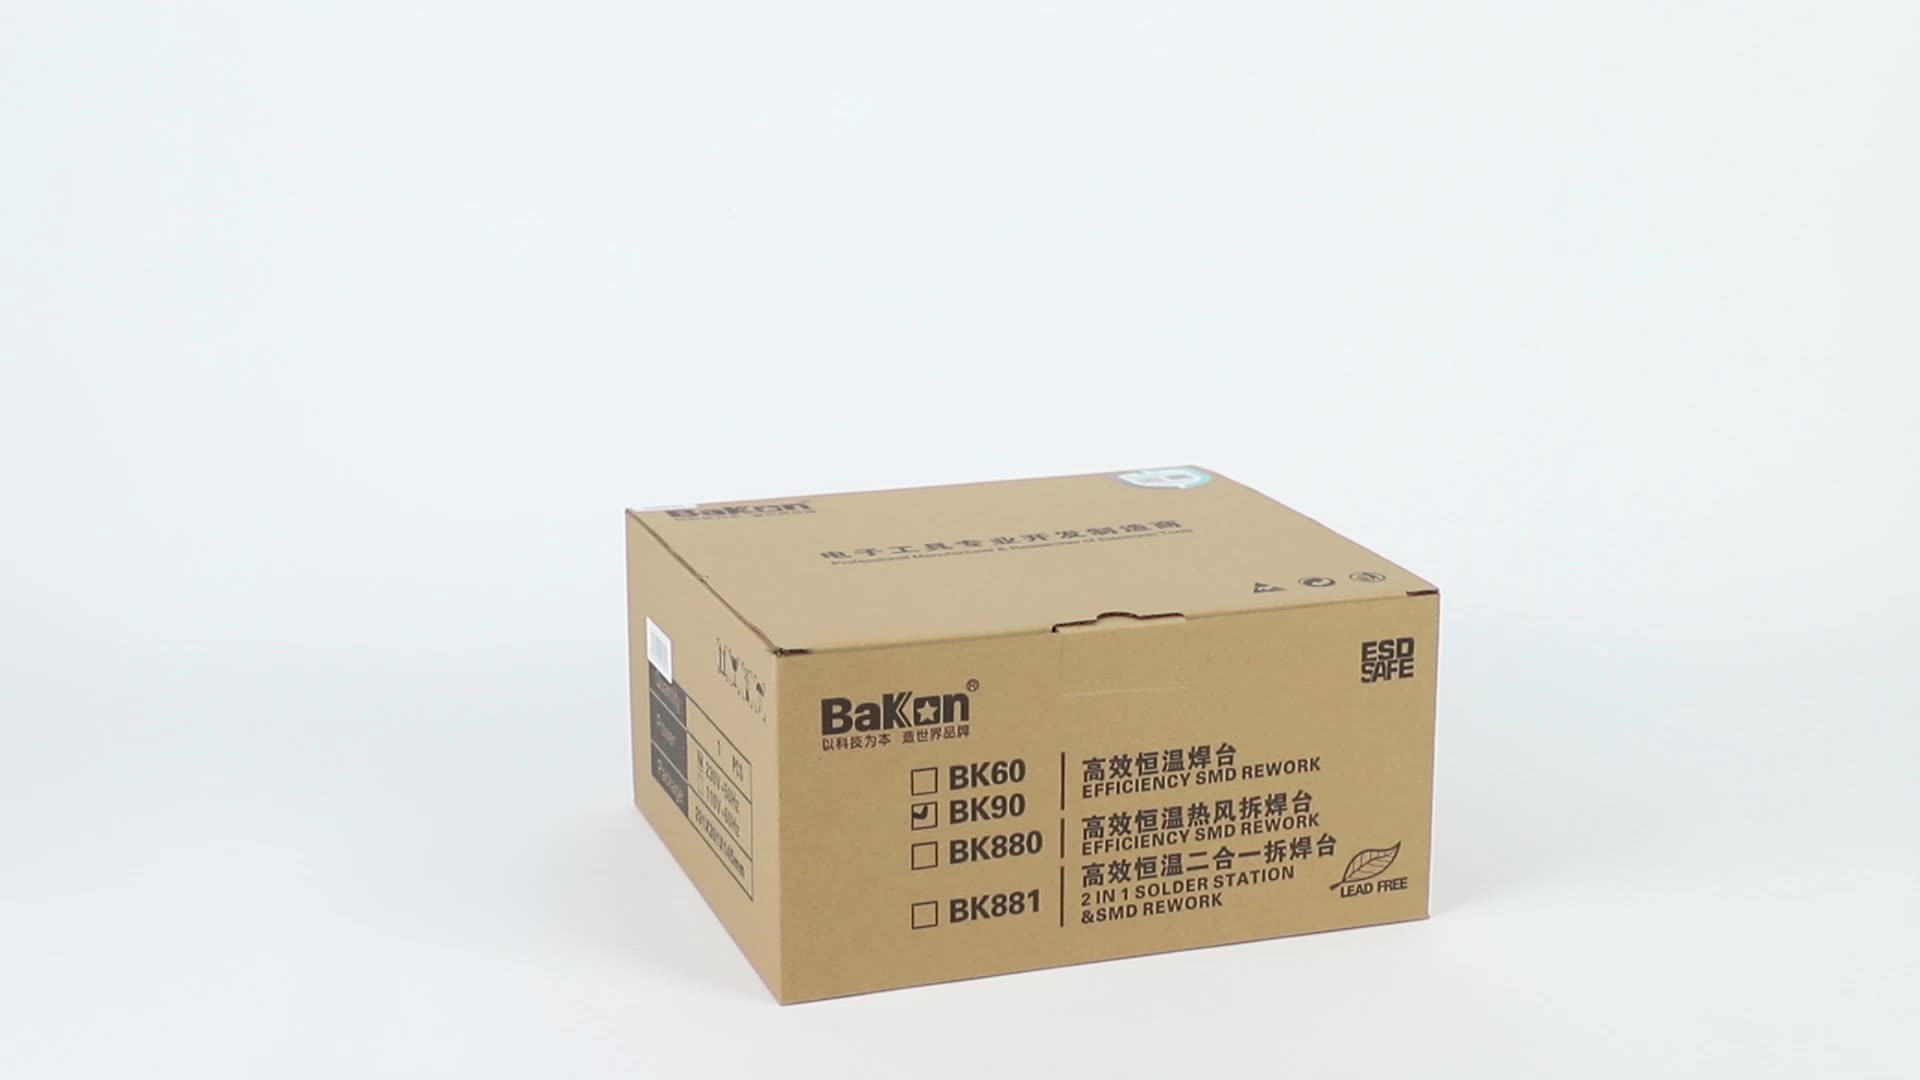 Bakon BK90 90w micro plastic soldering iron station